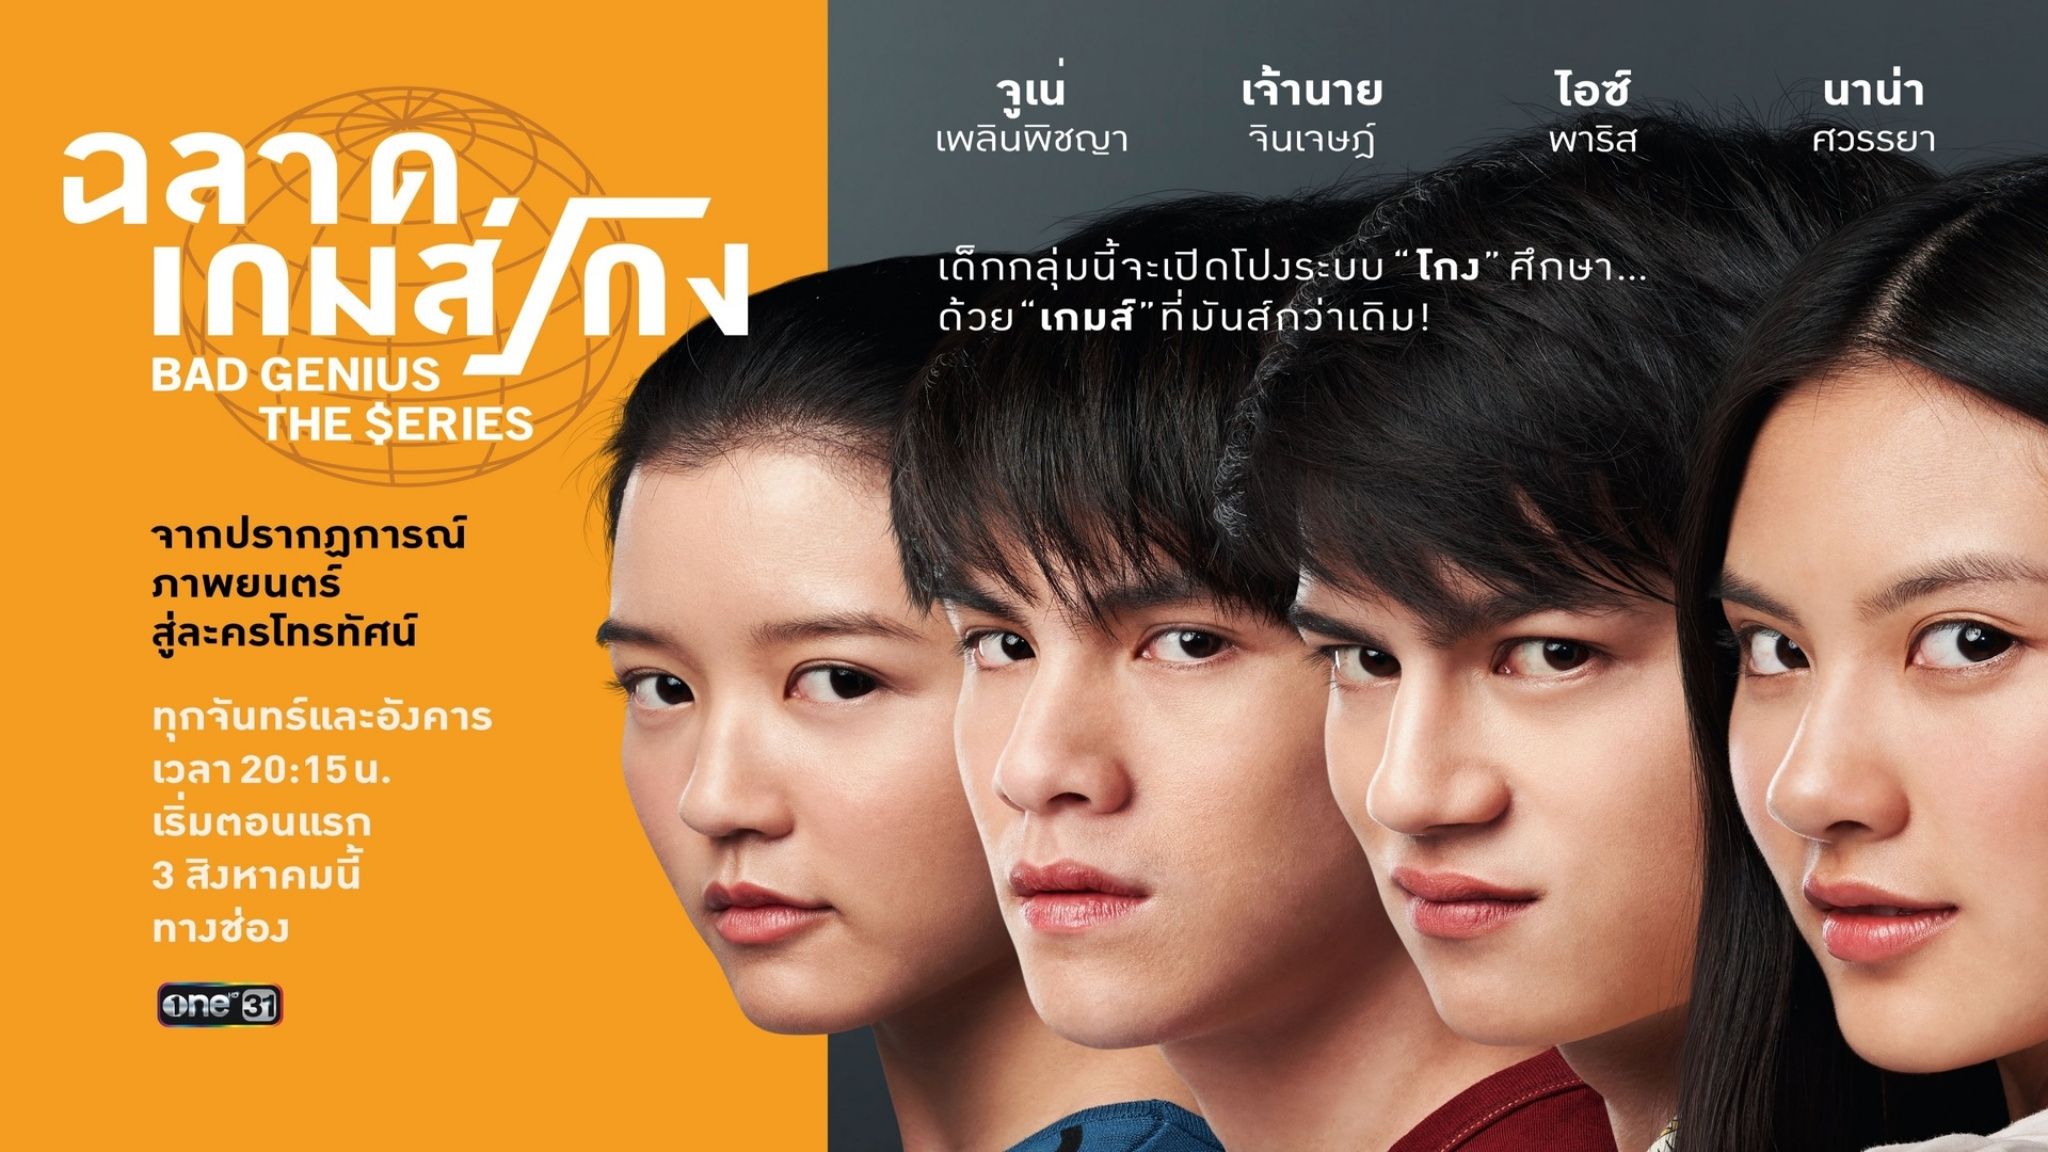 Bad Genius The Series Episode 11, Drama Thailand yang Trending di Twitter Bikin Netizen Greget - Zona Priangan